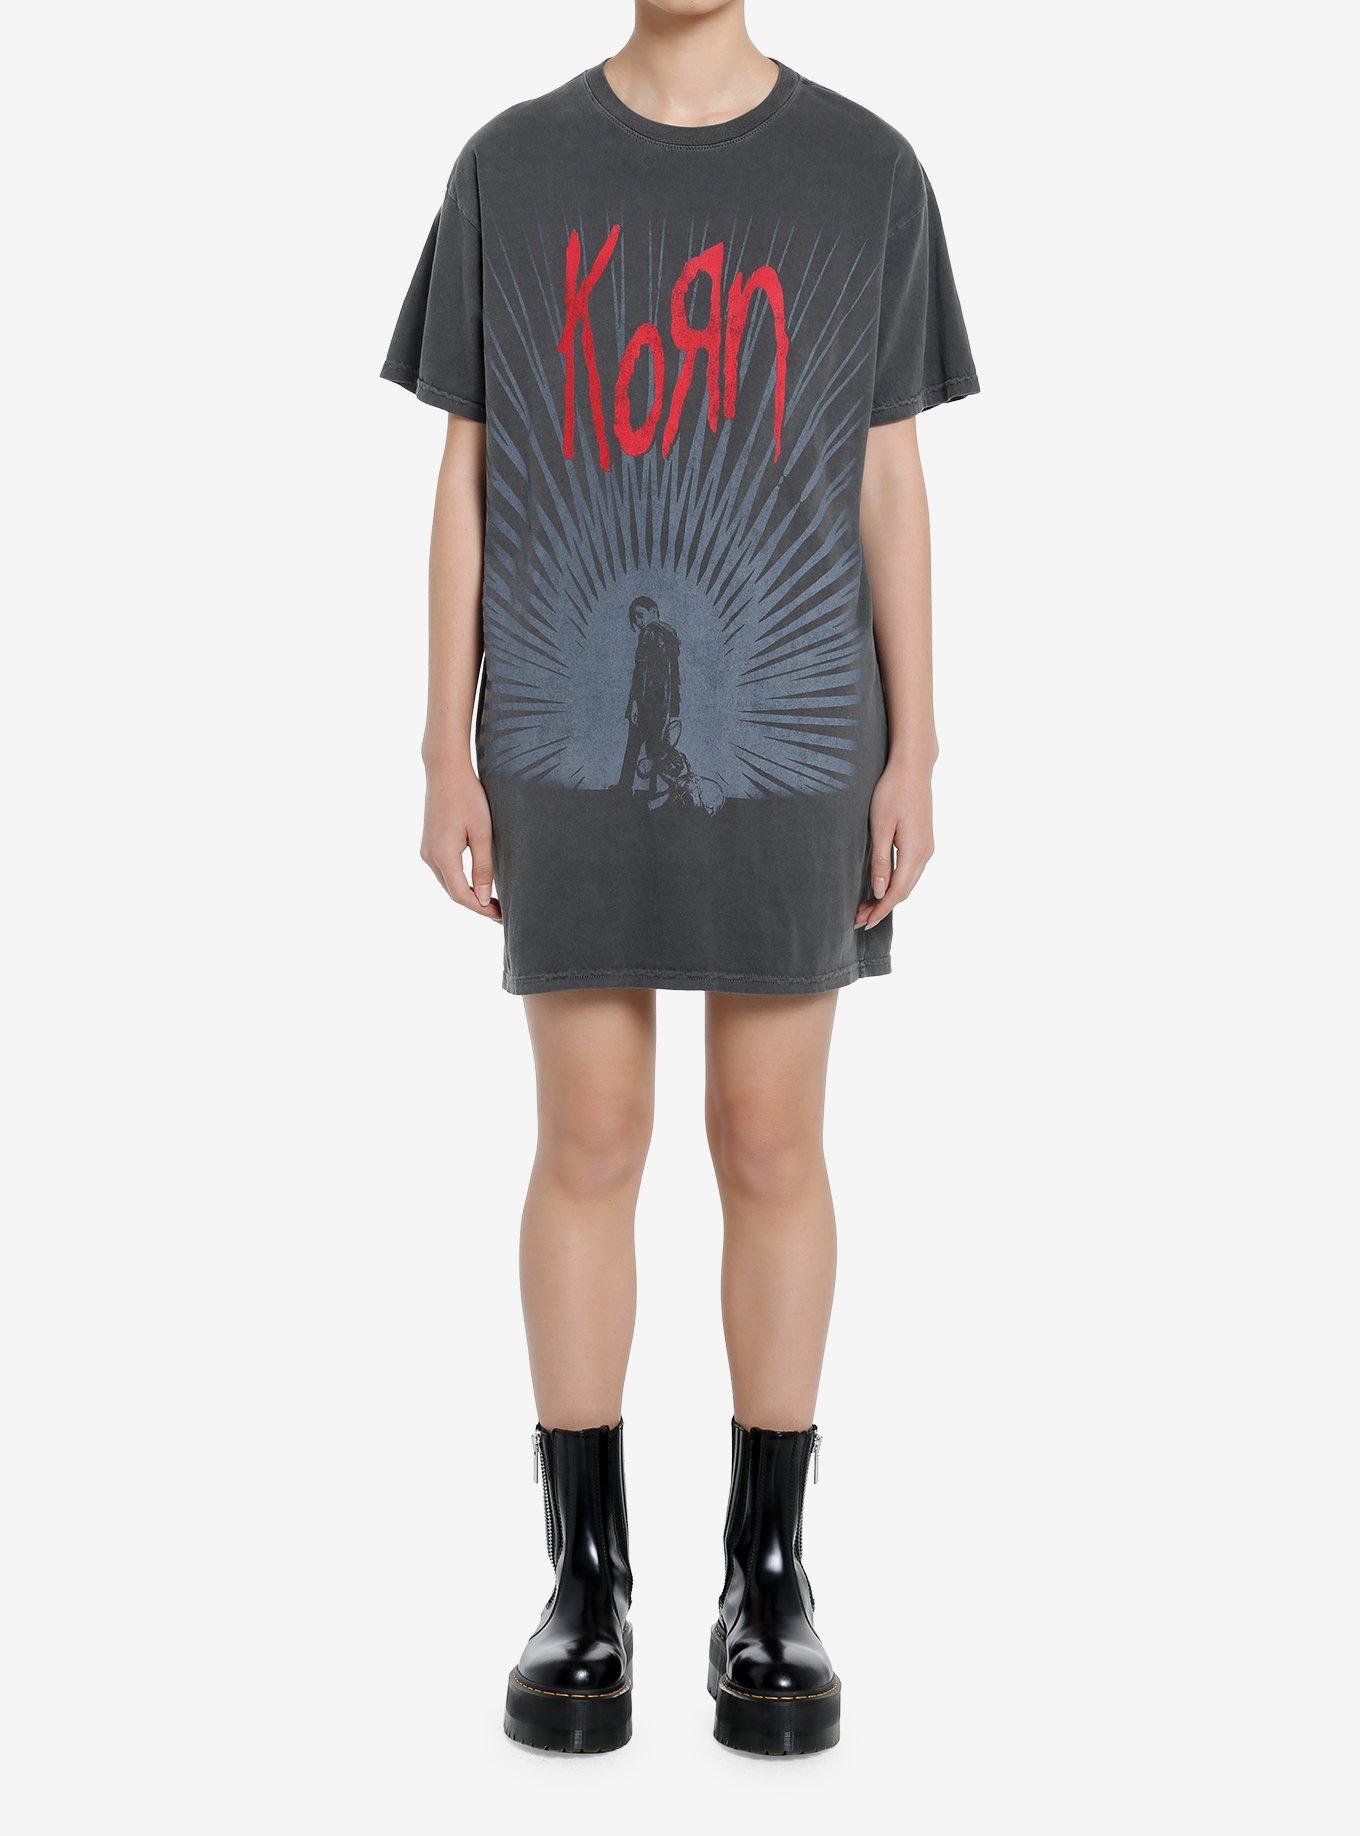 Korn Radiating Light T-Shirt Dress